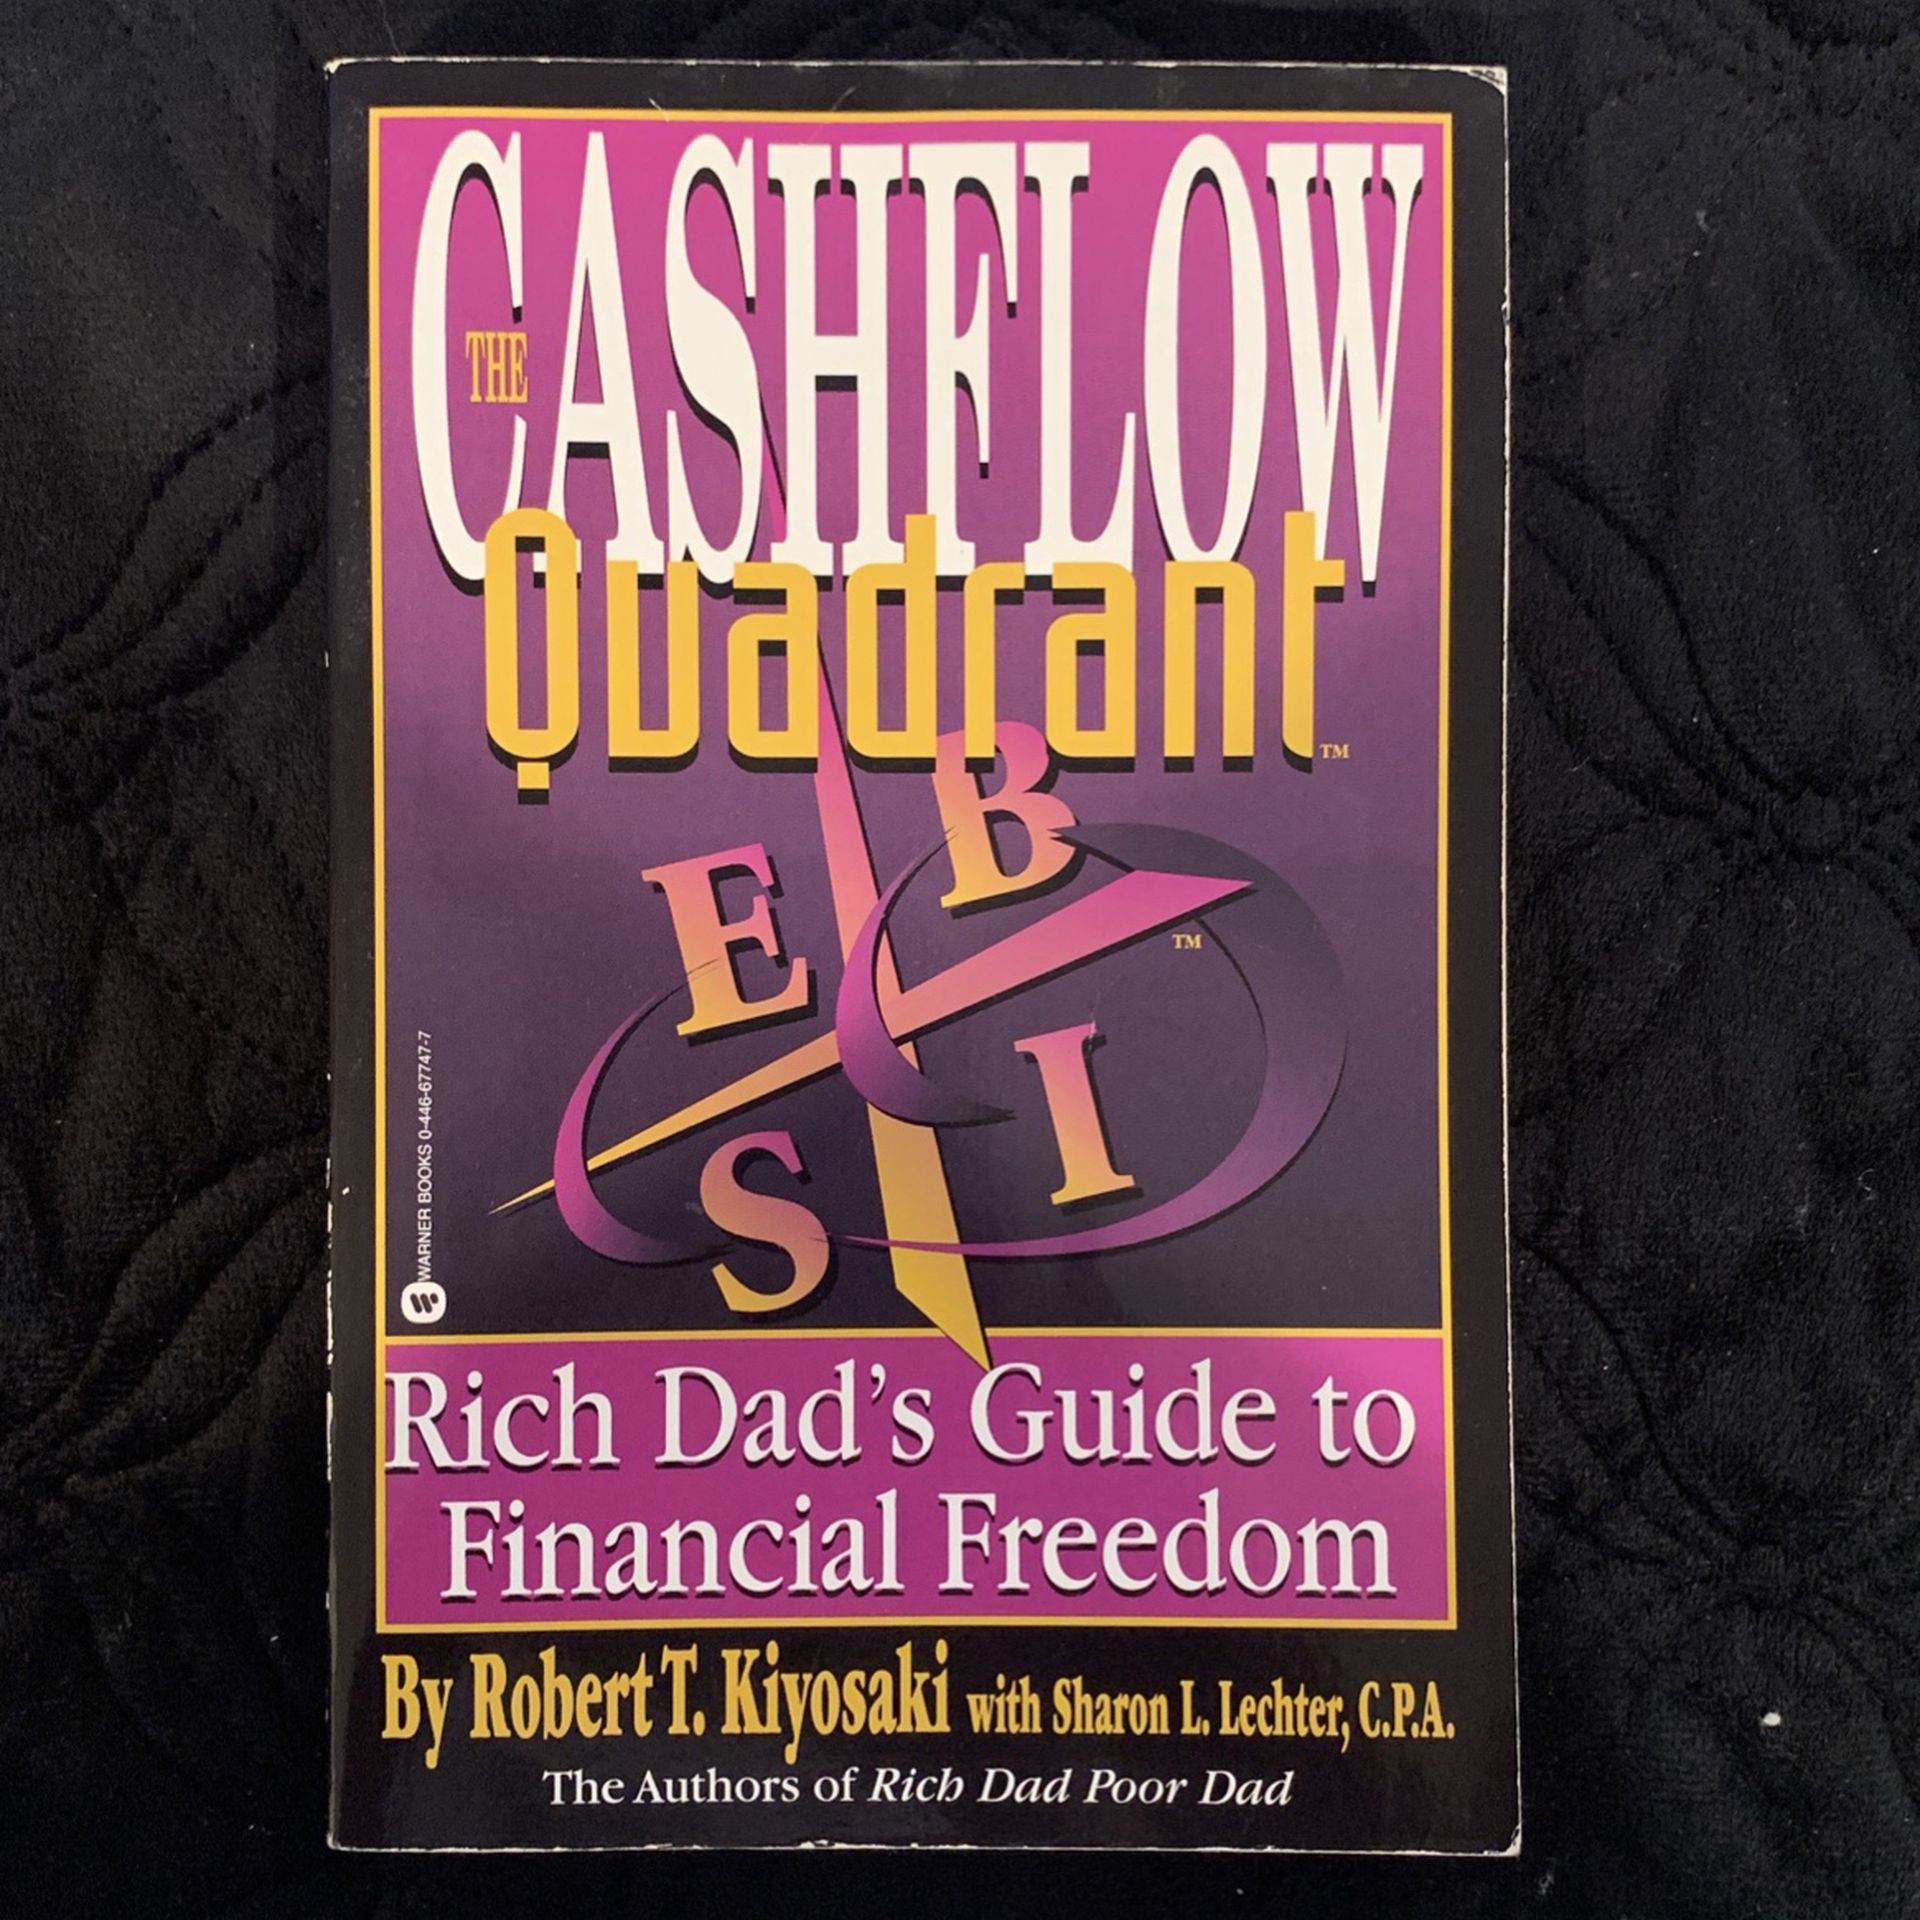 The Cashflow Quadrant By Robert T. Kiyosaki